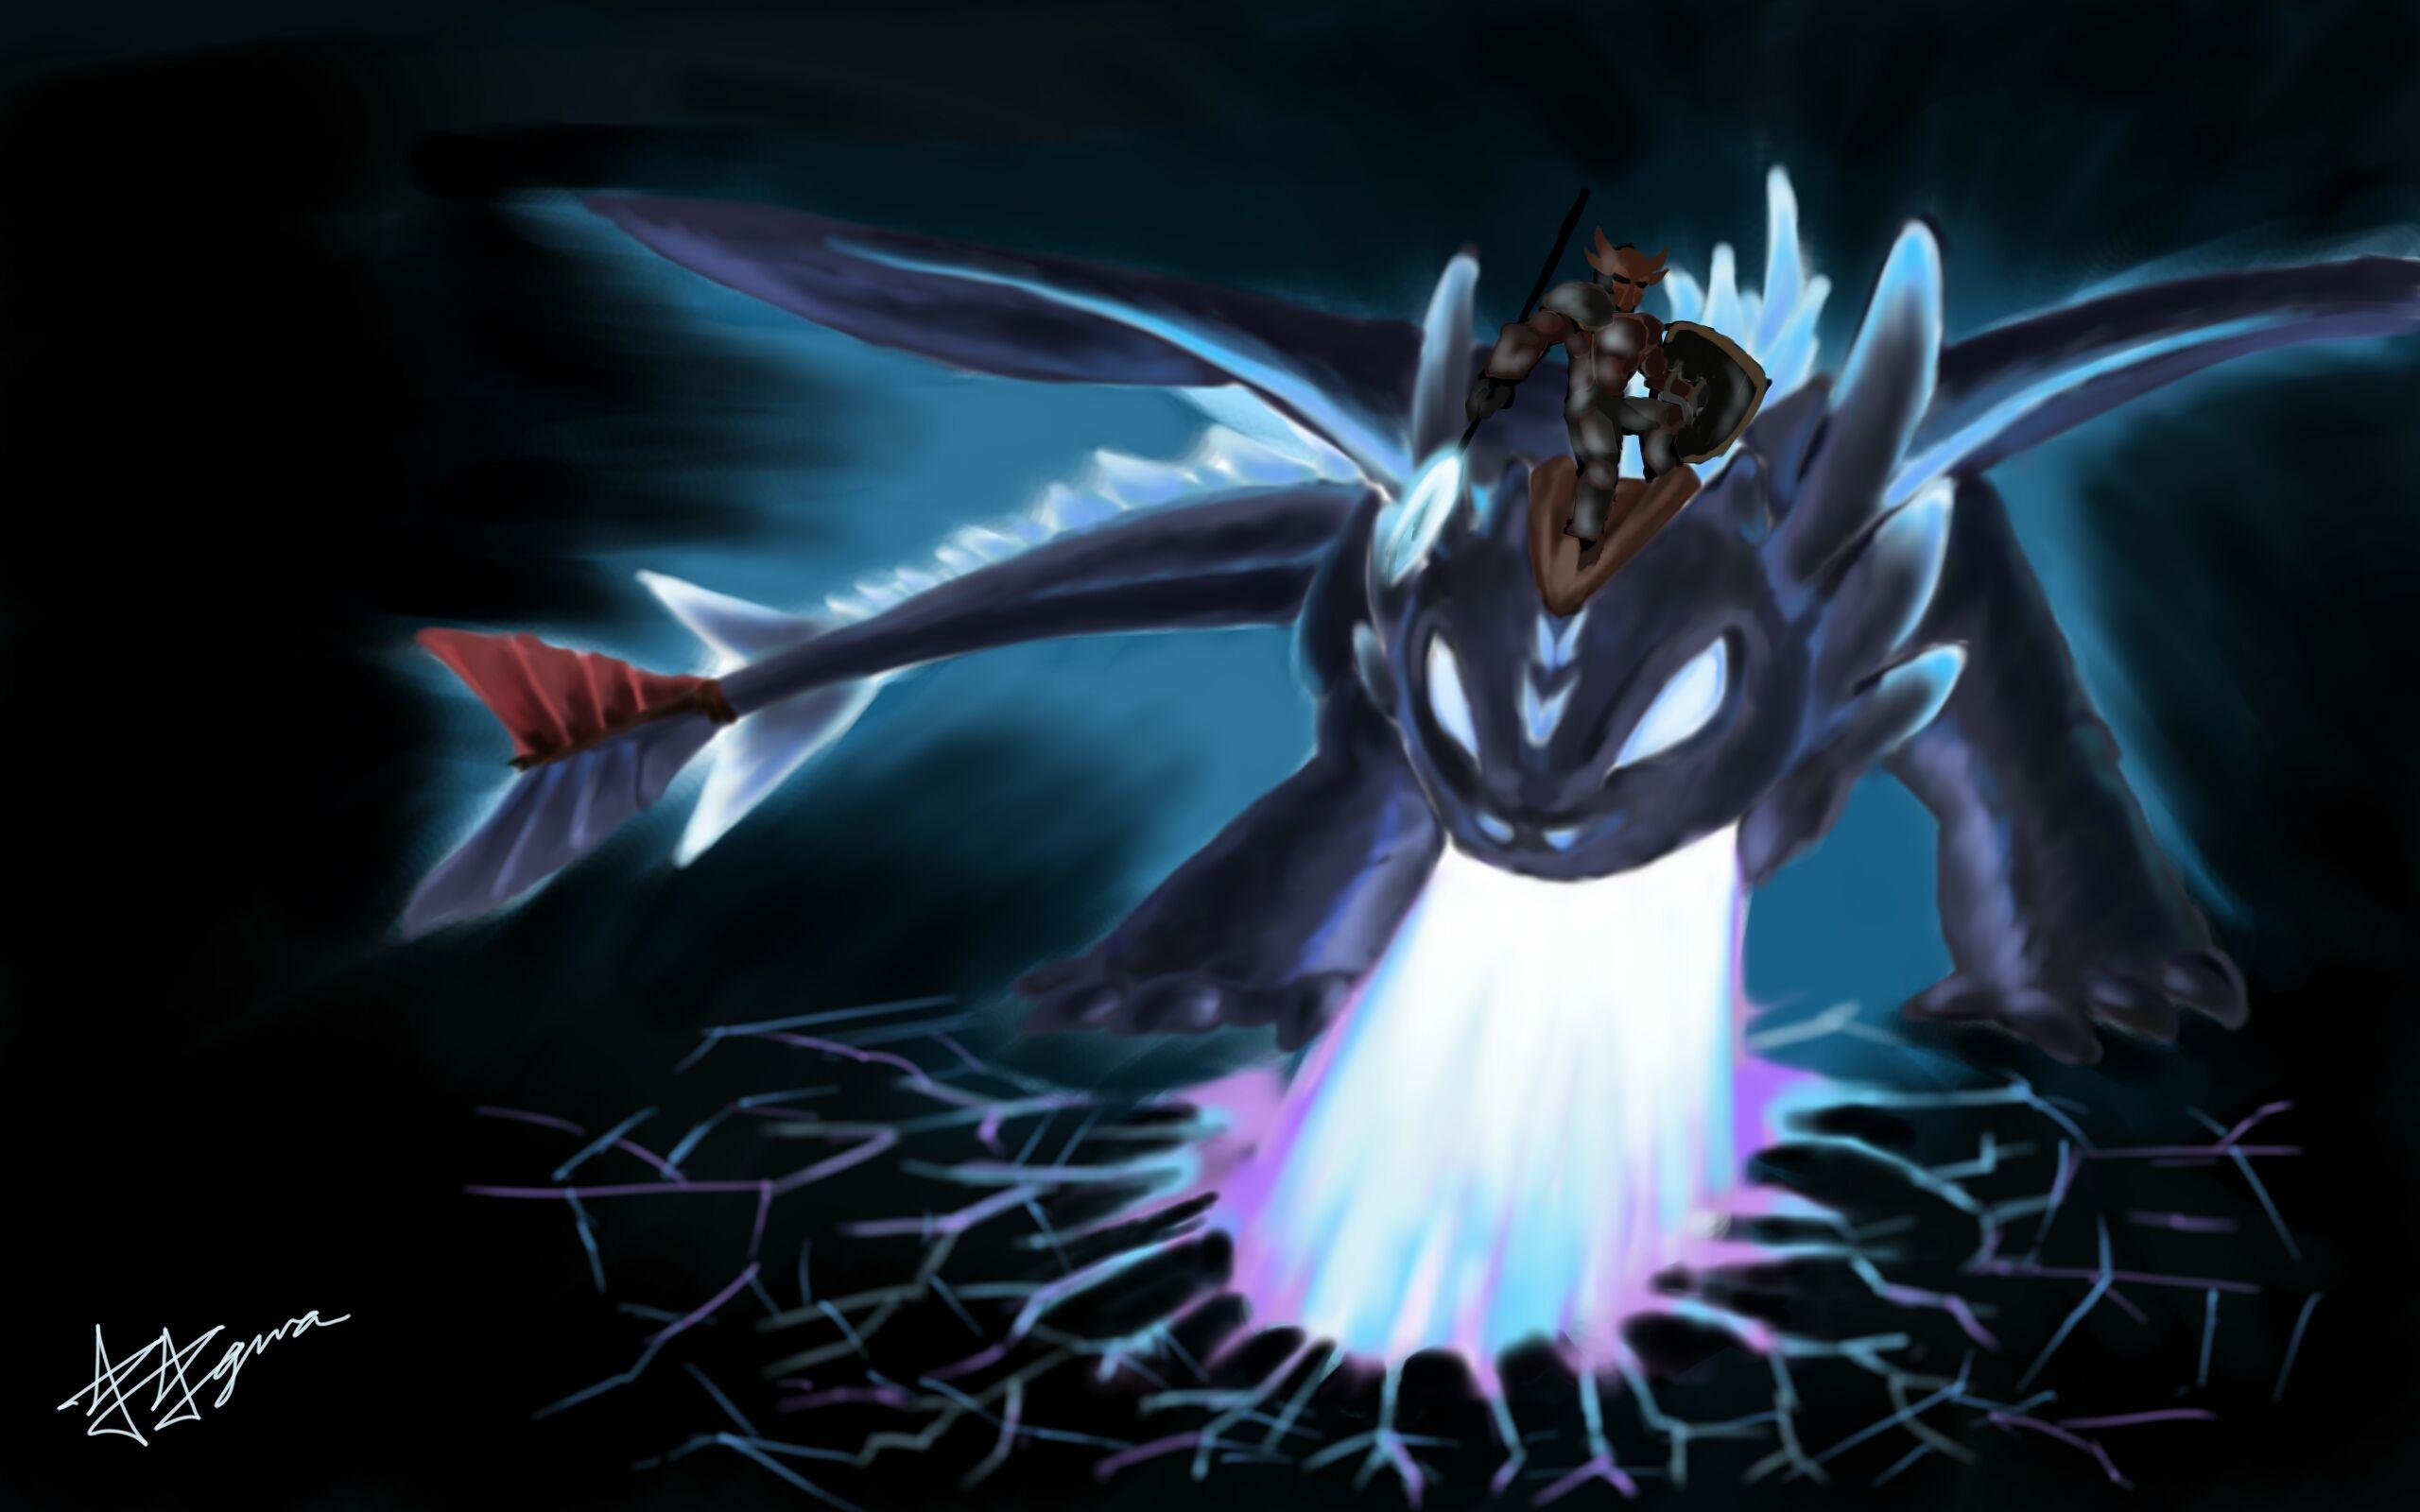 Toothless, the Super Nightfury Alpha Dragon